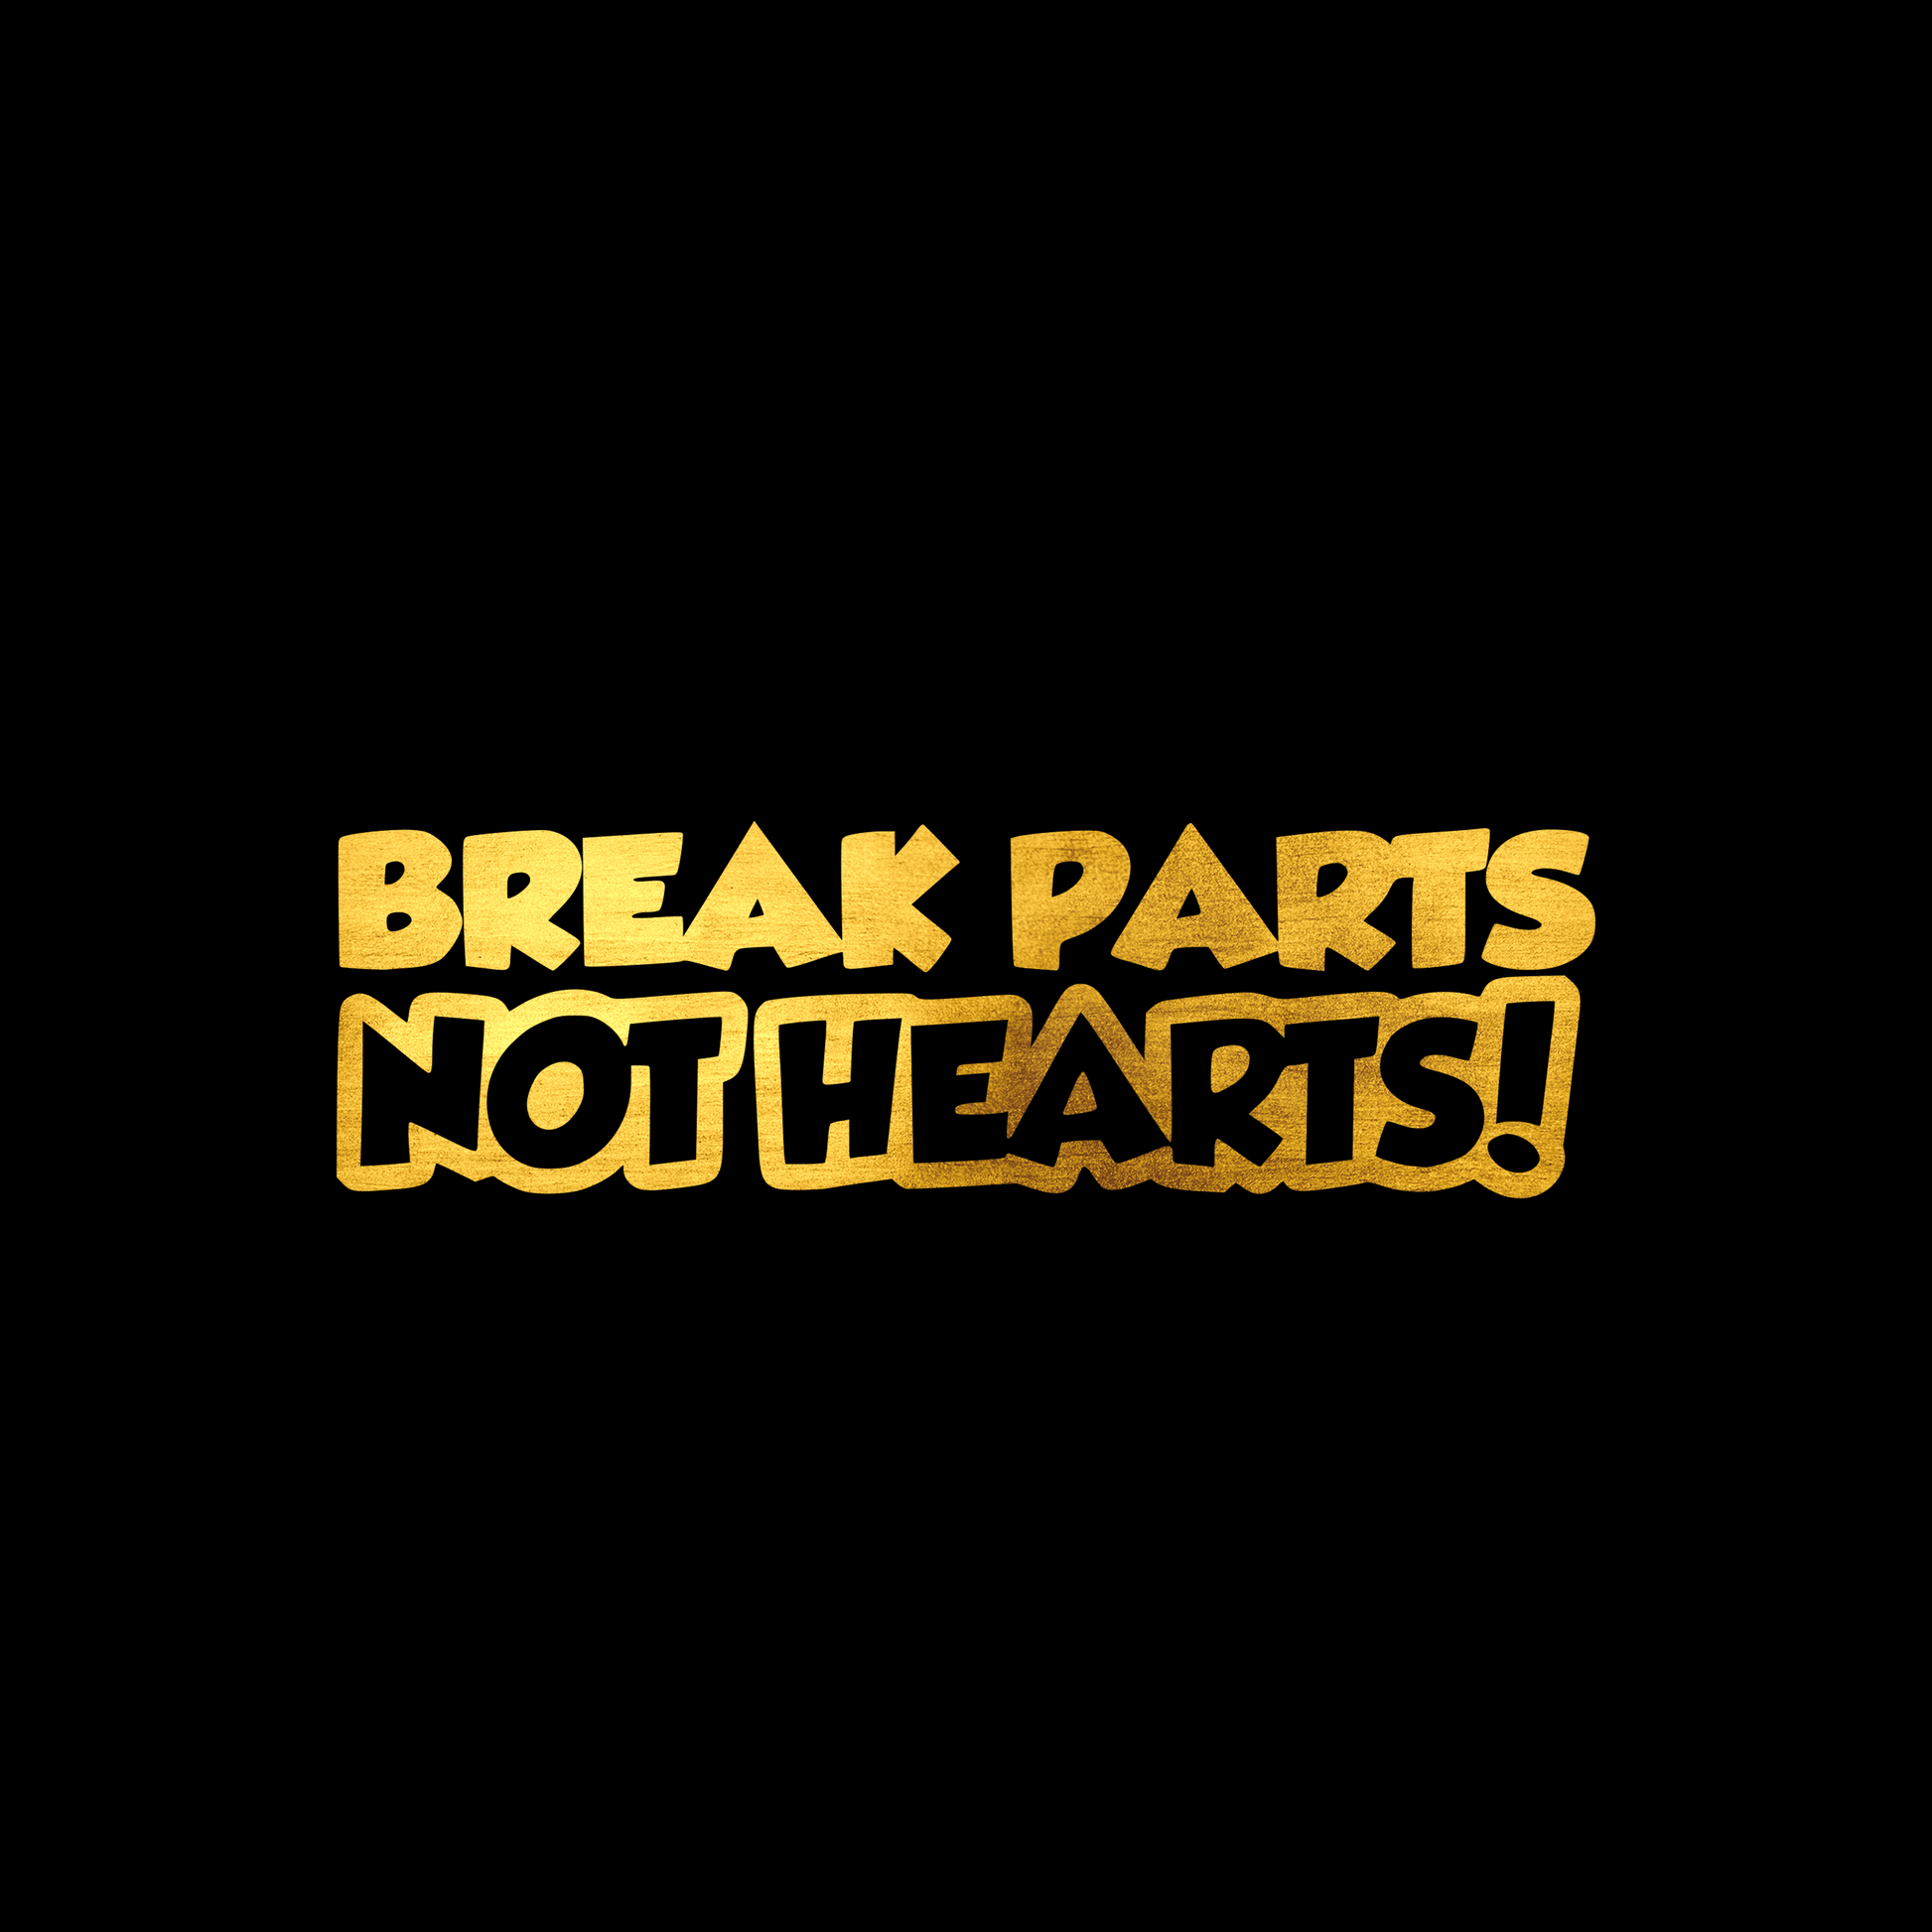 Break parts not hearts sticker decal